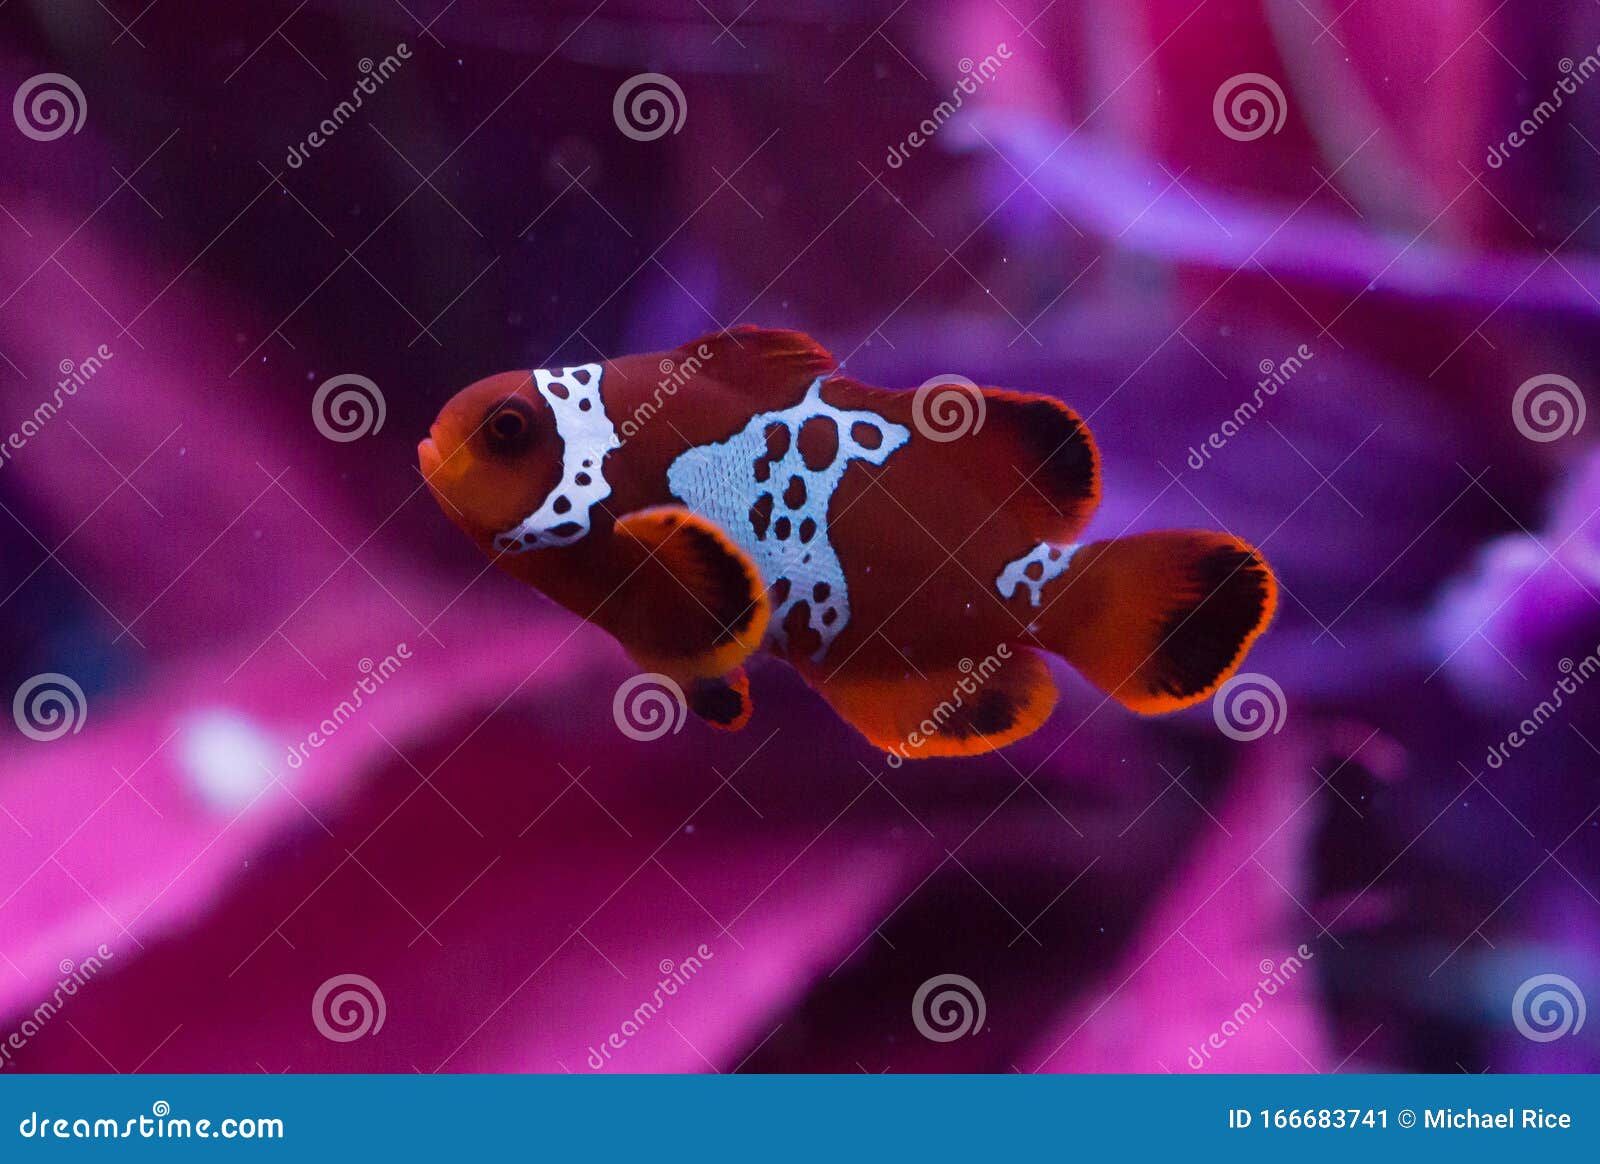 lightning maroon clownfish